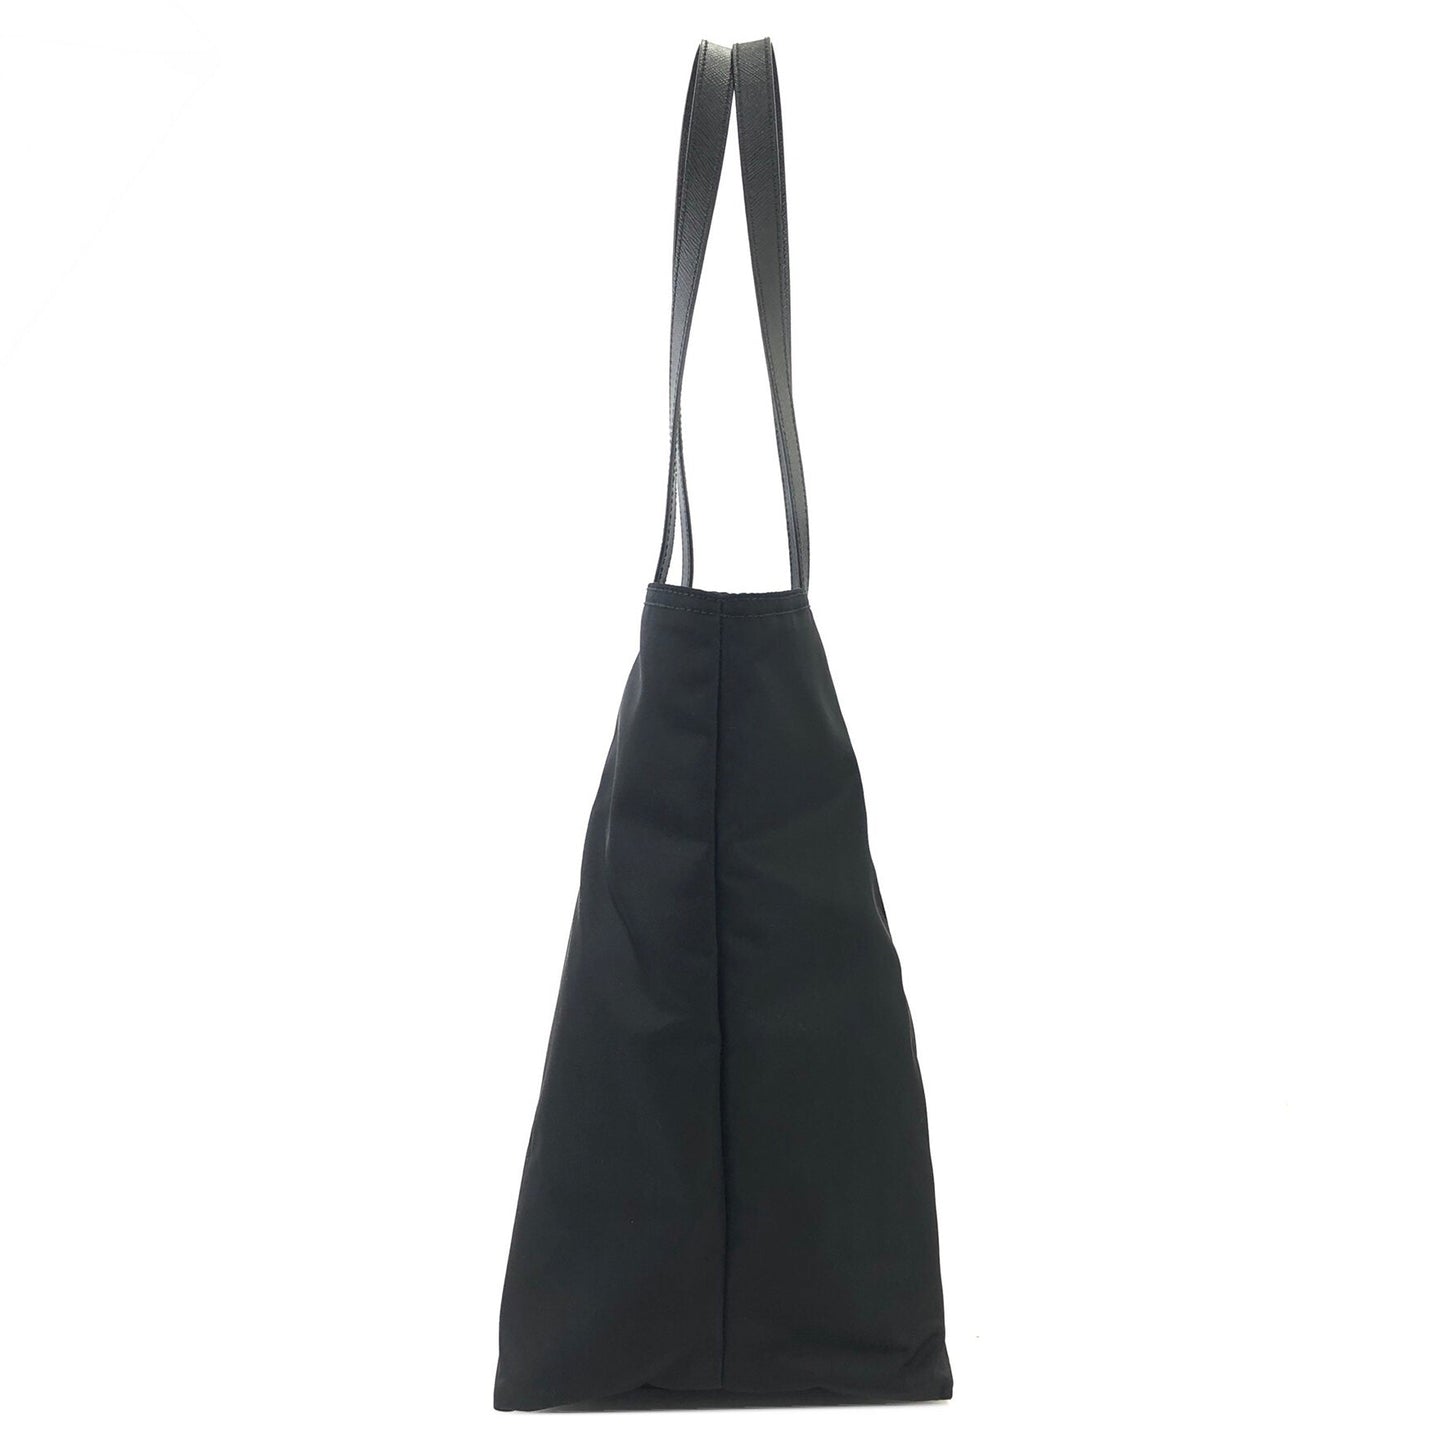 PRADA Triangle logo Nylon Tote bag Black Vintage ke54e5